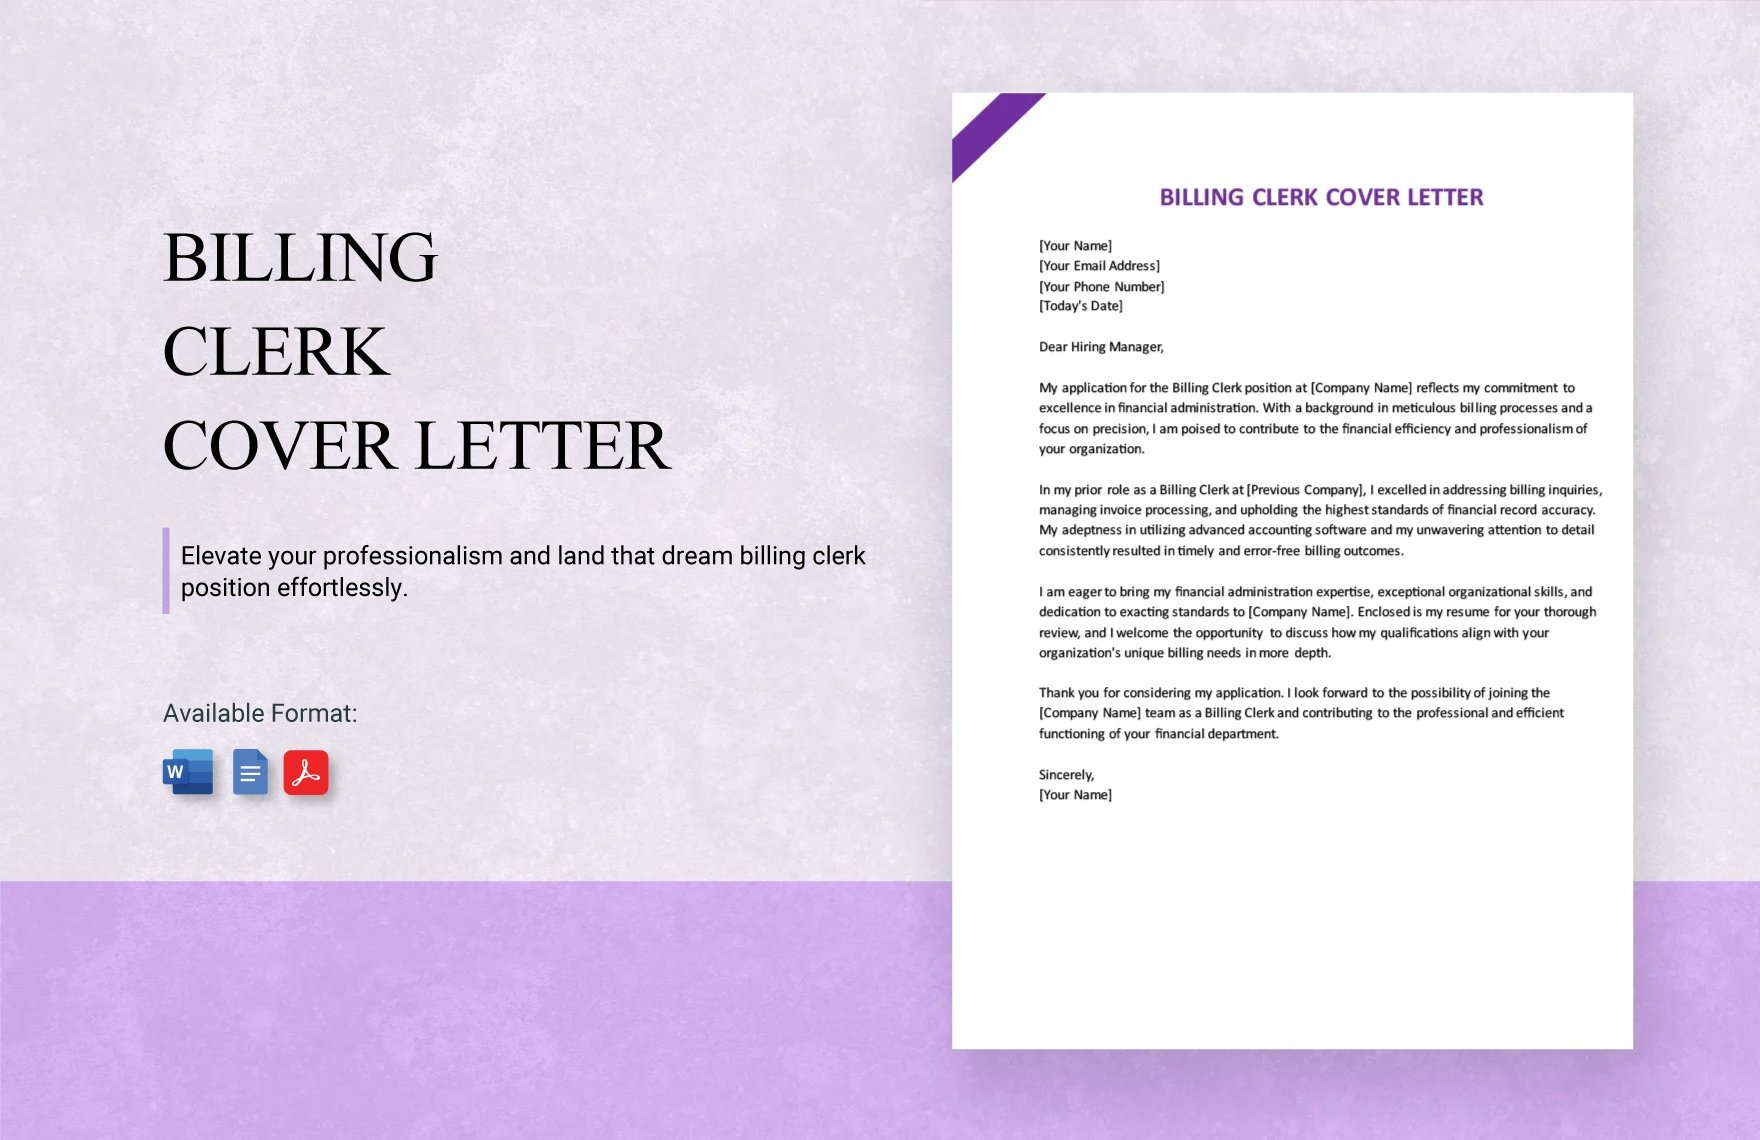 Billing Clerk Cover Letter in Word, Google Docs, PDF